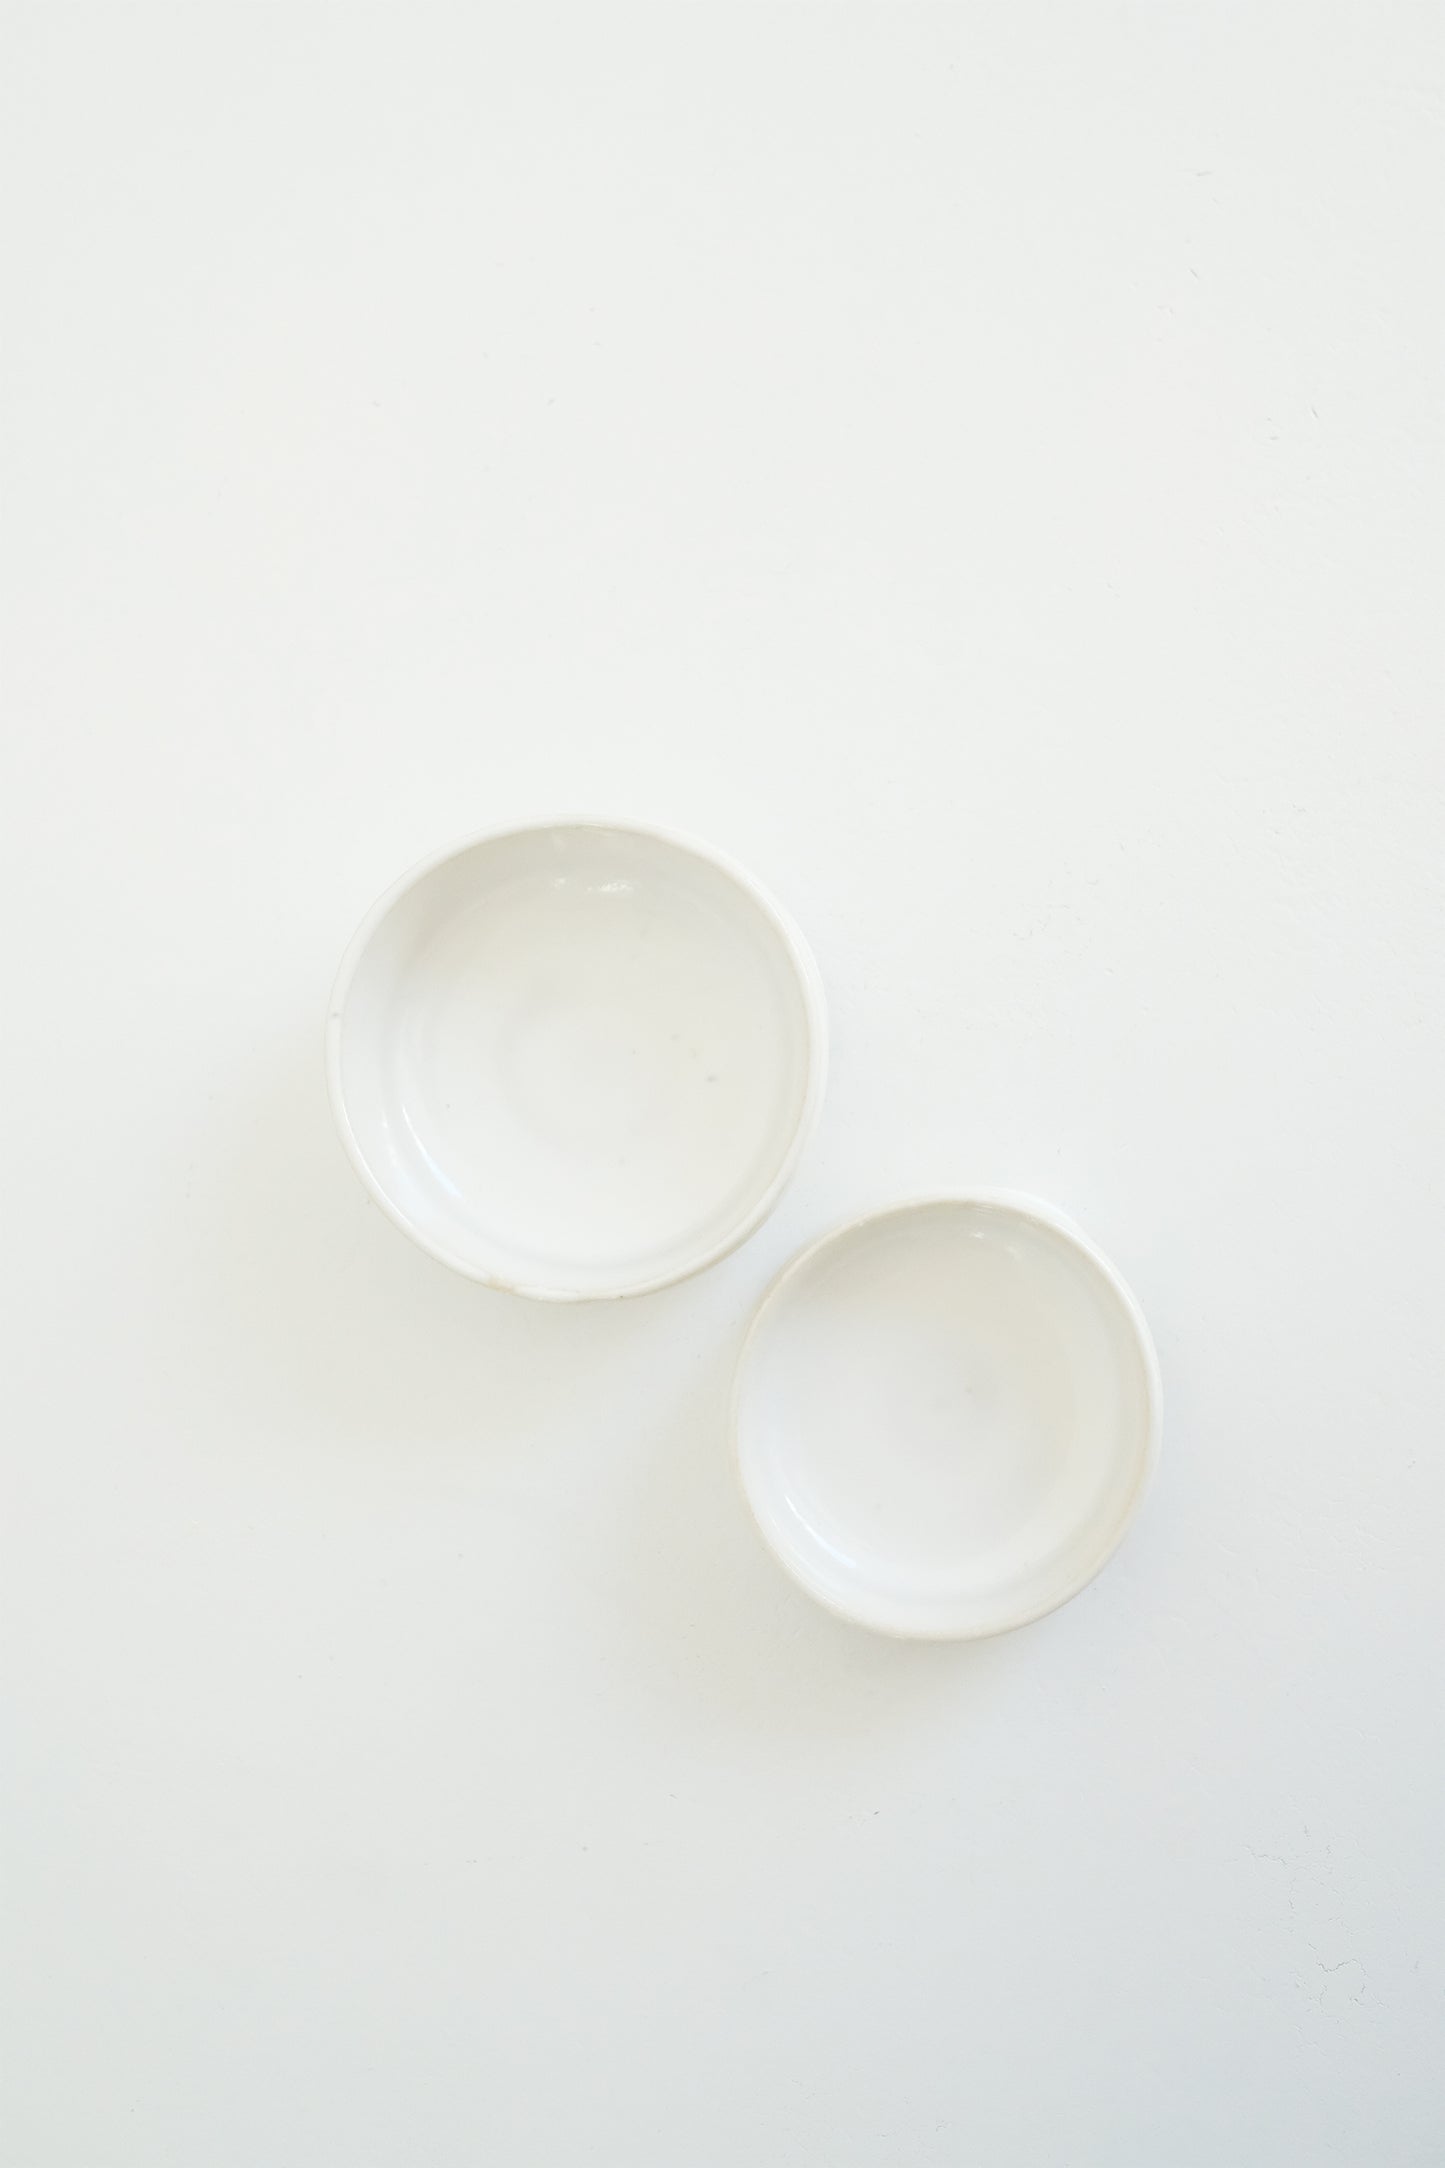 pinch bowls #1 - set of 2